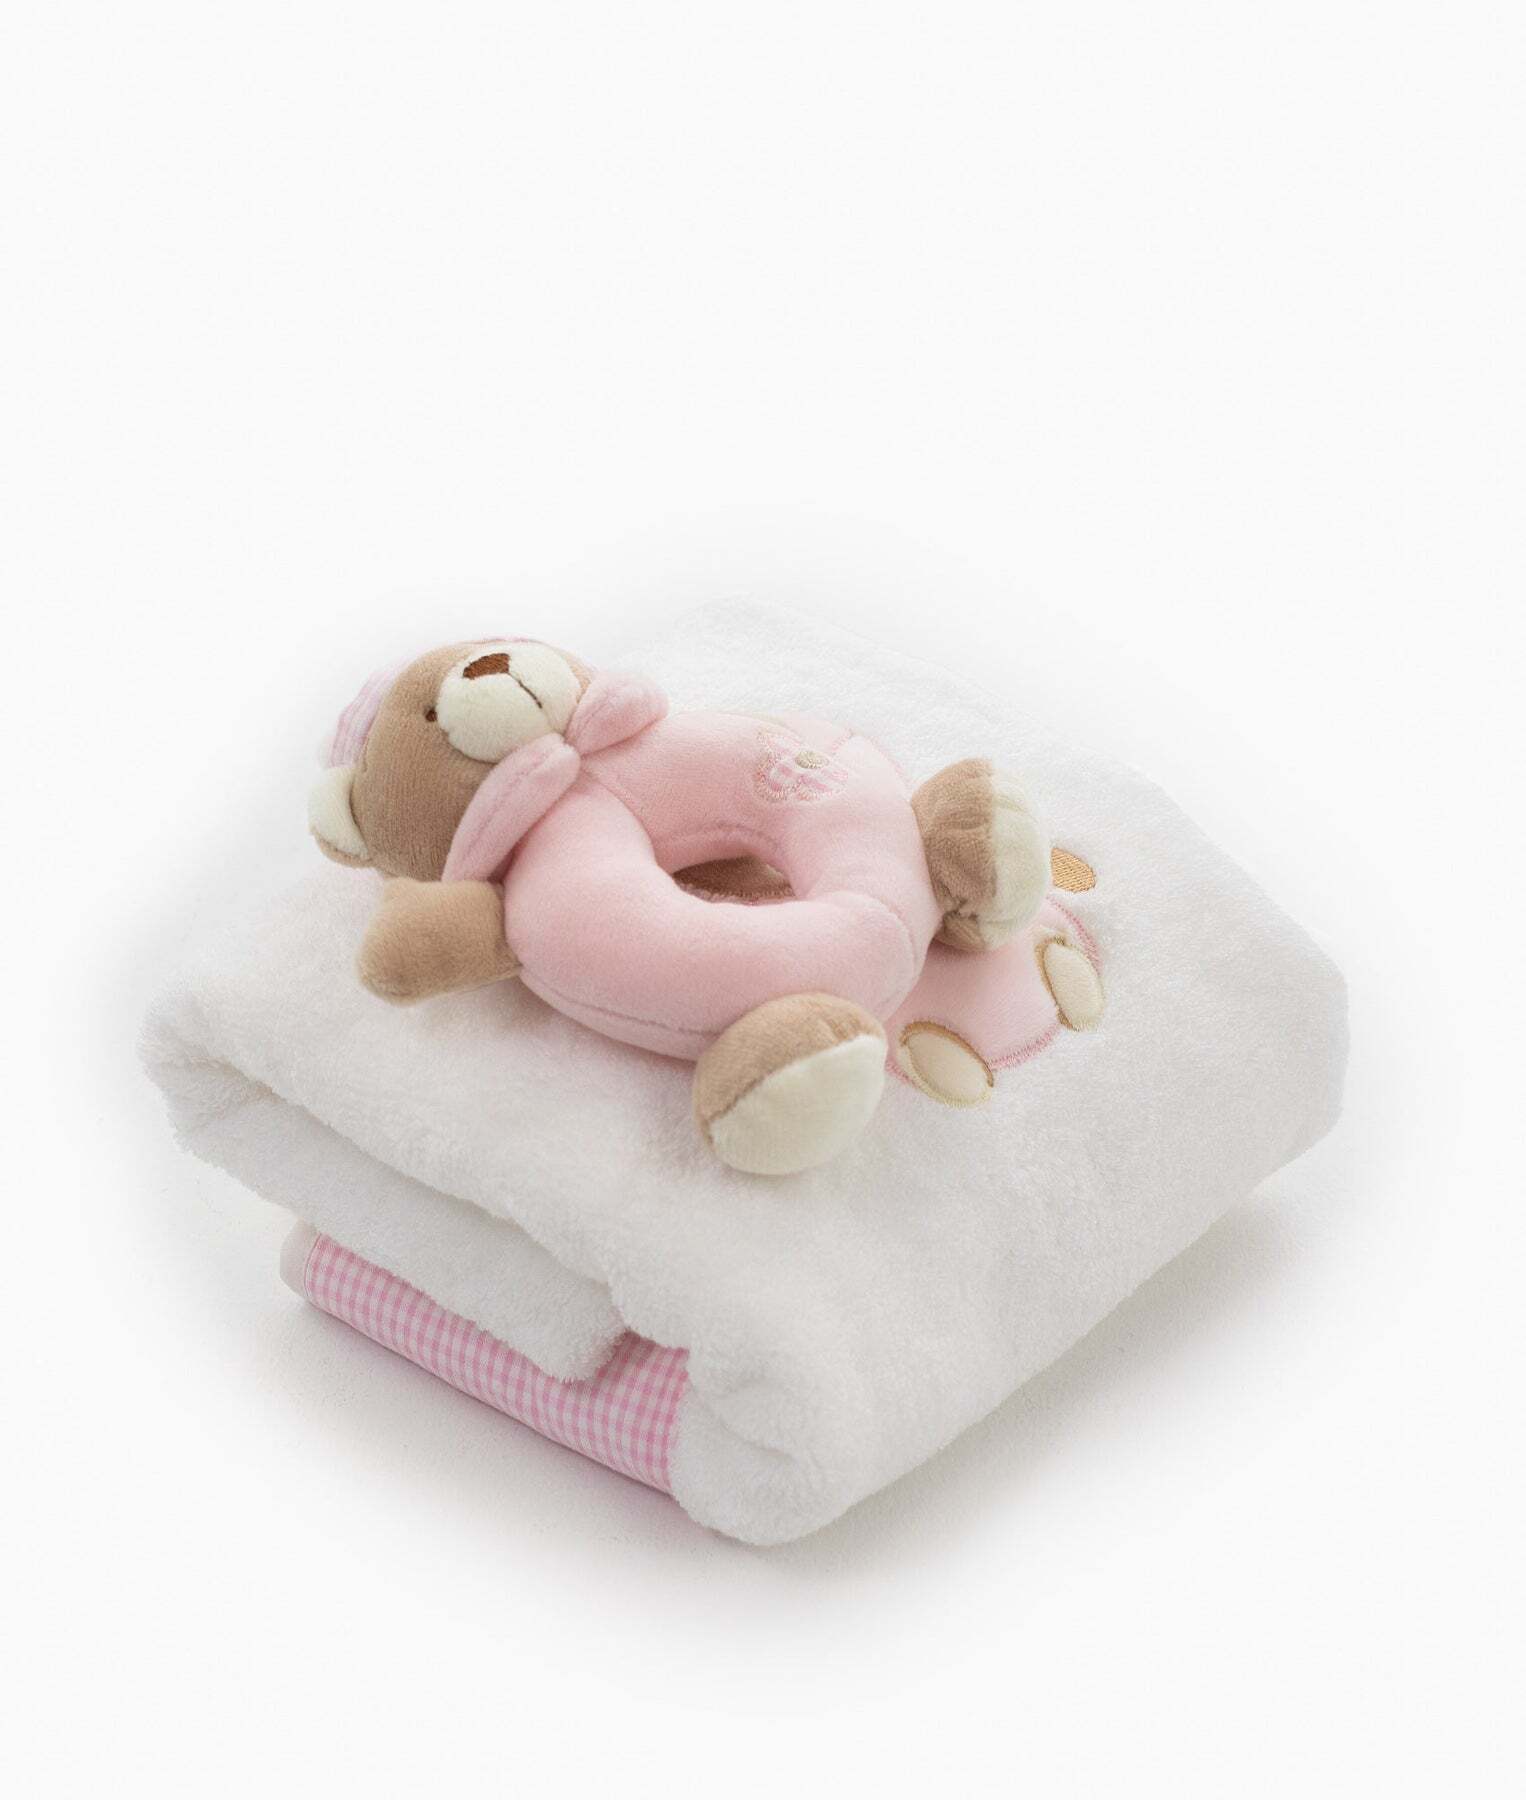 bear-towel-rattle-set-pink-923_1800x1800